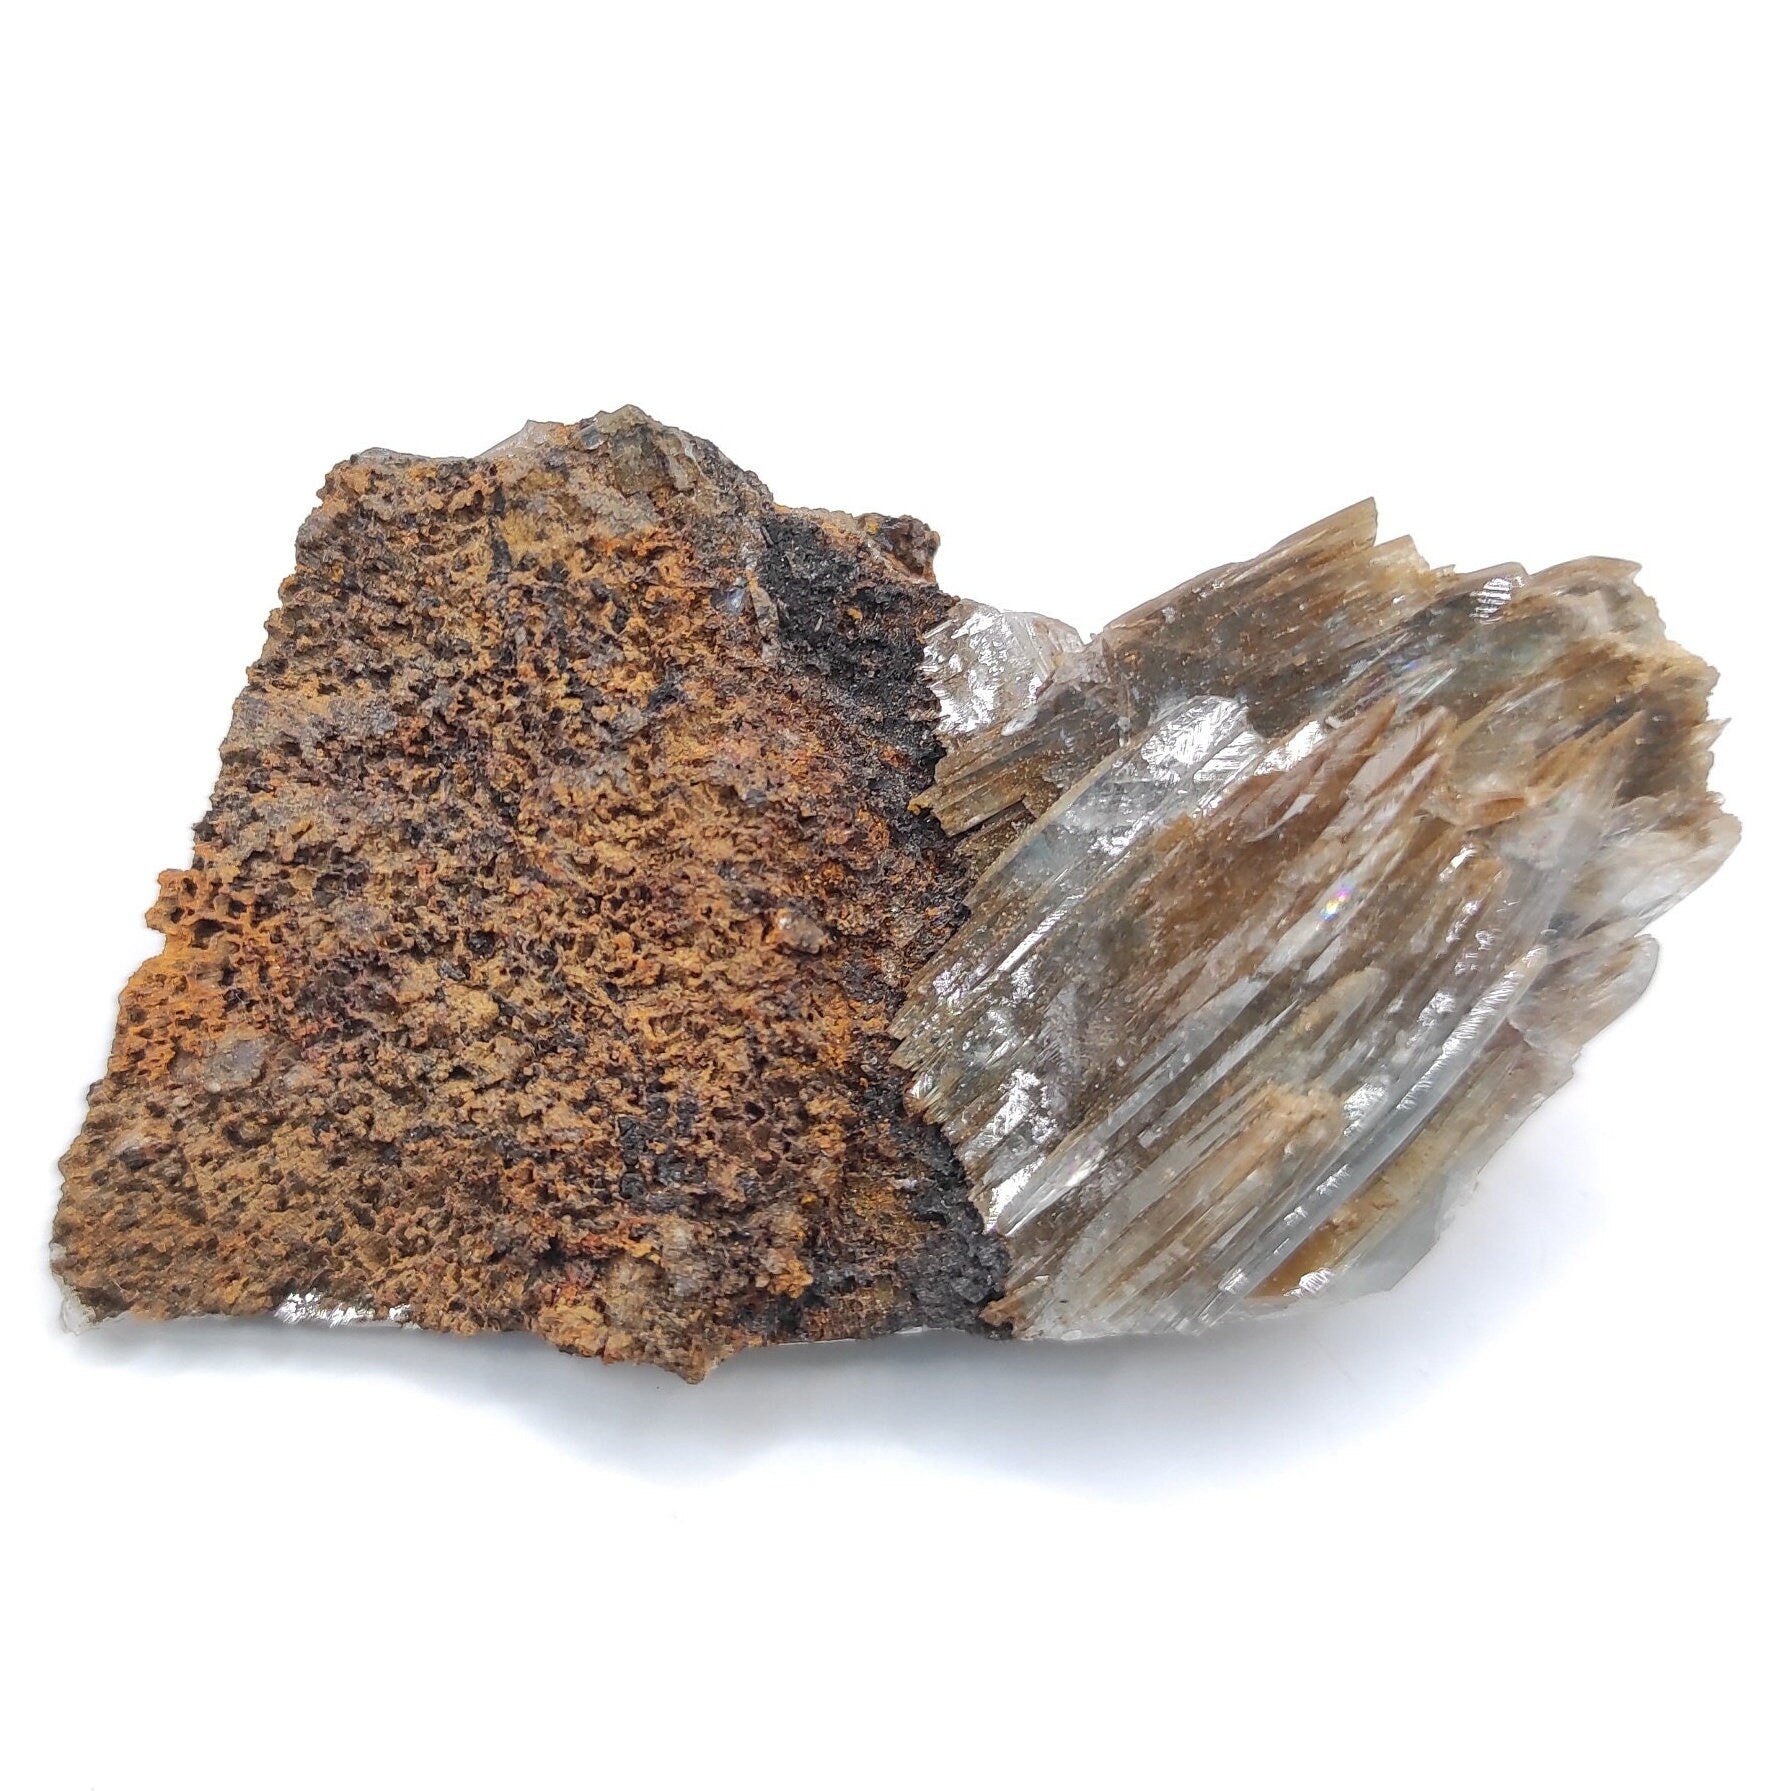 30g Brown and Blue Barite Specimen - Nador, Morocco - Barite Mineral Specimen - Blue Baryte from Morocco - Natural Barite Crystal Cluster